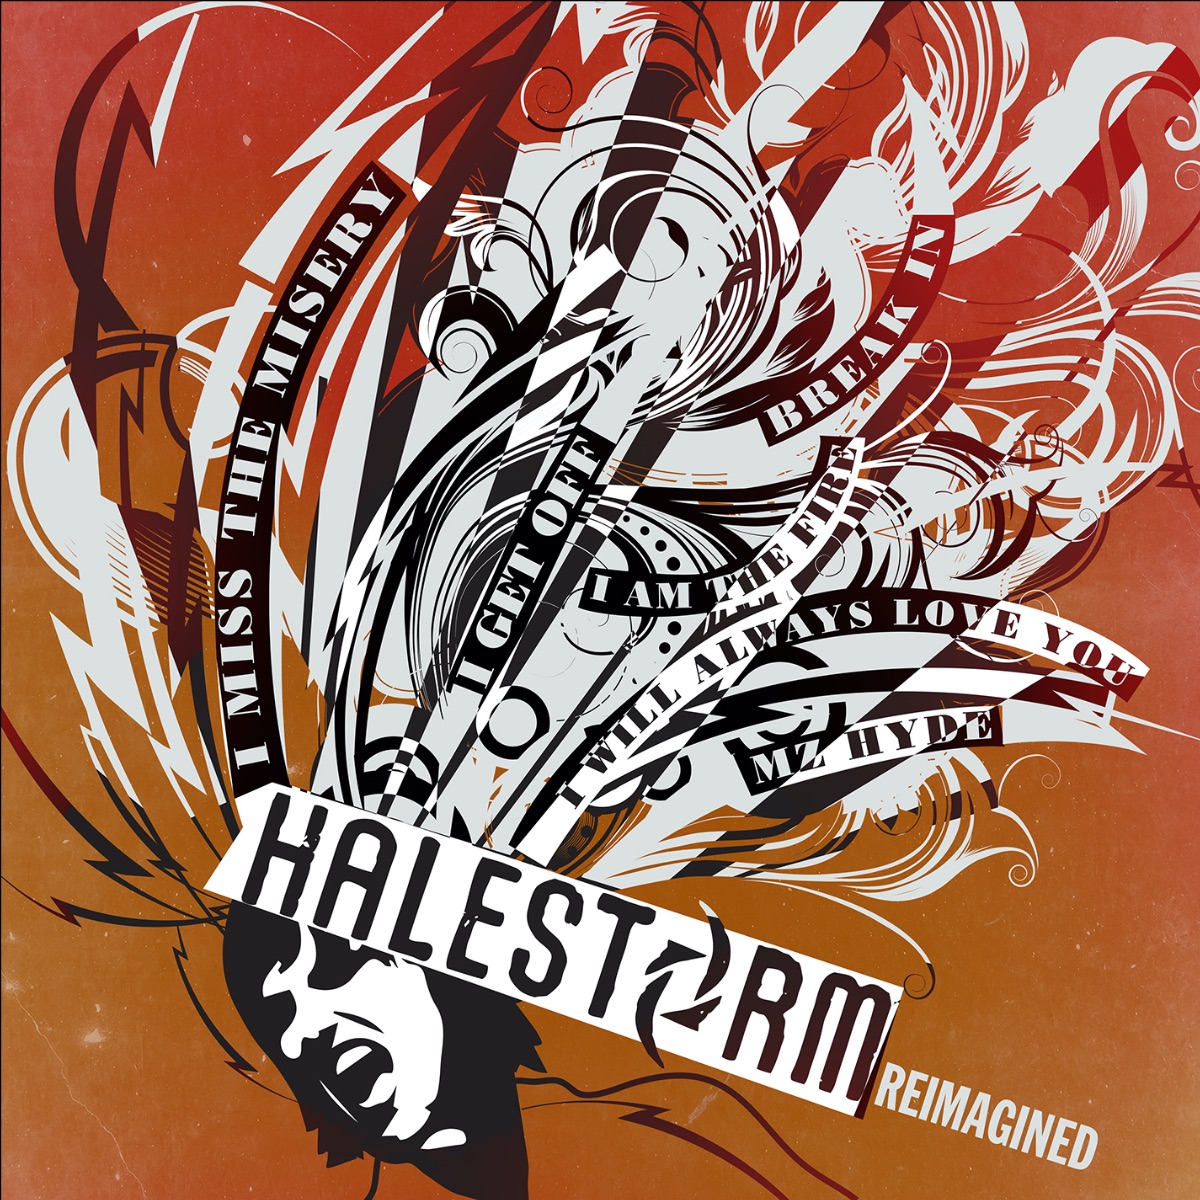 Halestorm Announce "Reimagined" EP + Listen To "Break In" Feat. Amy Lee